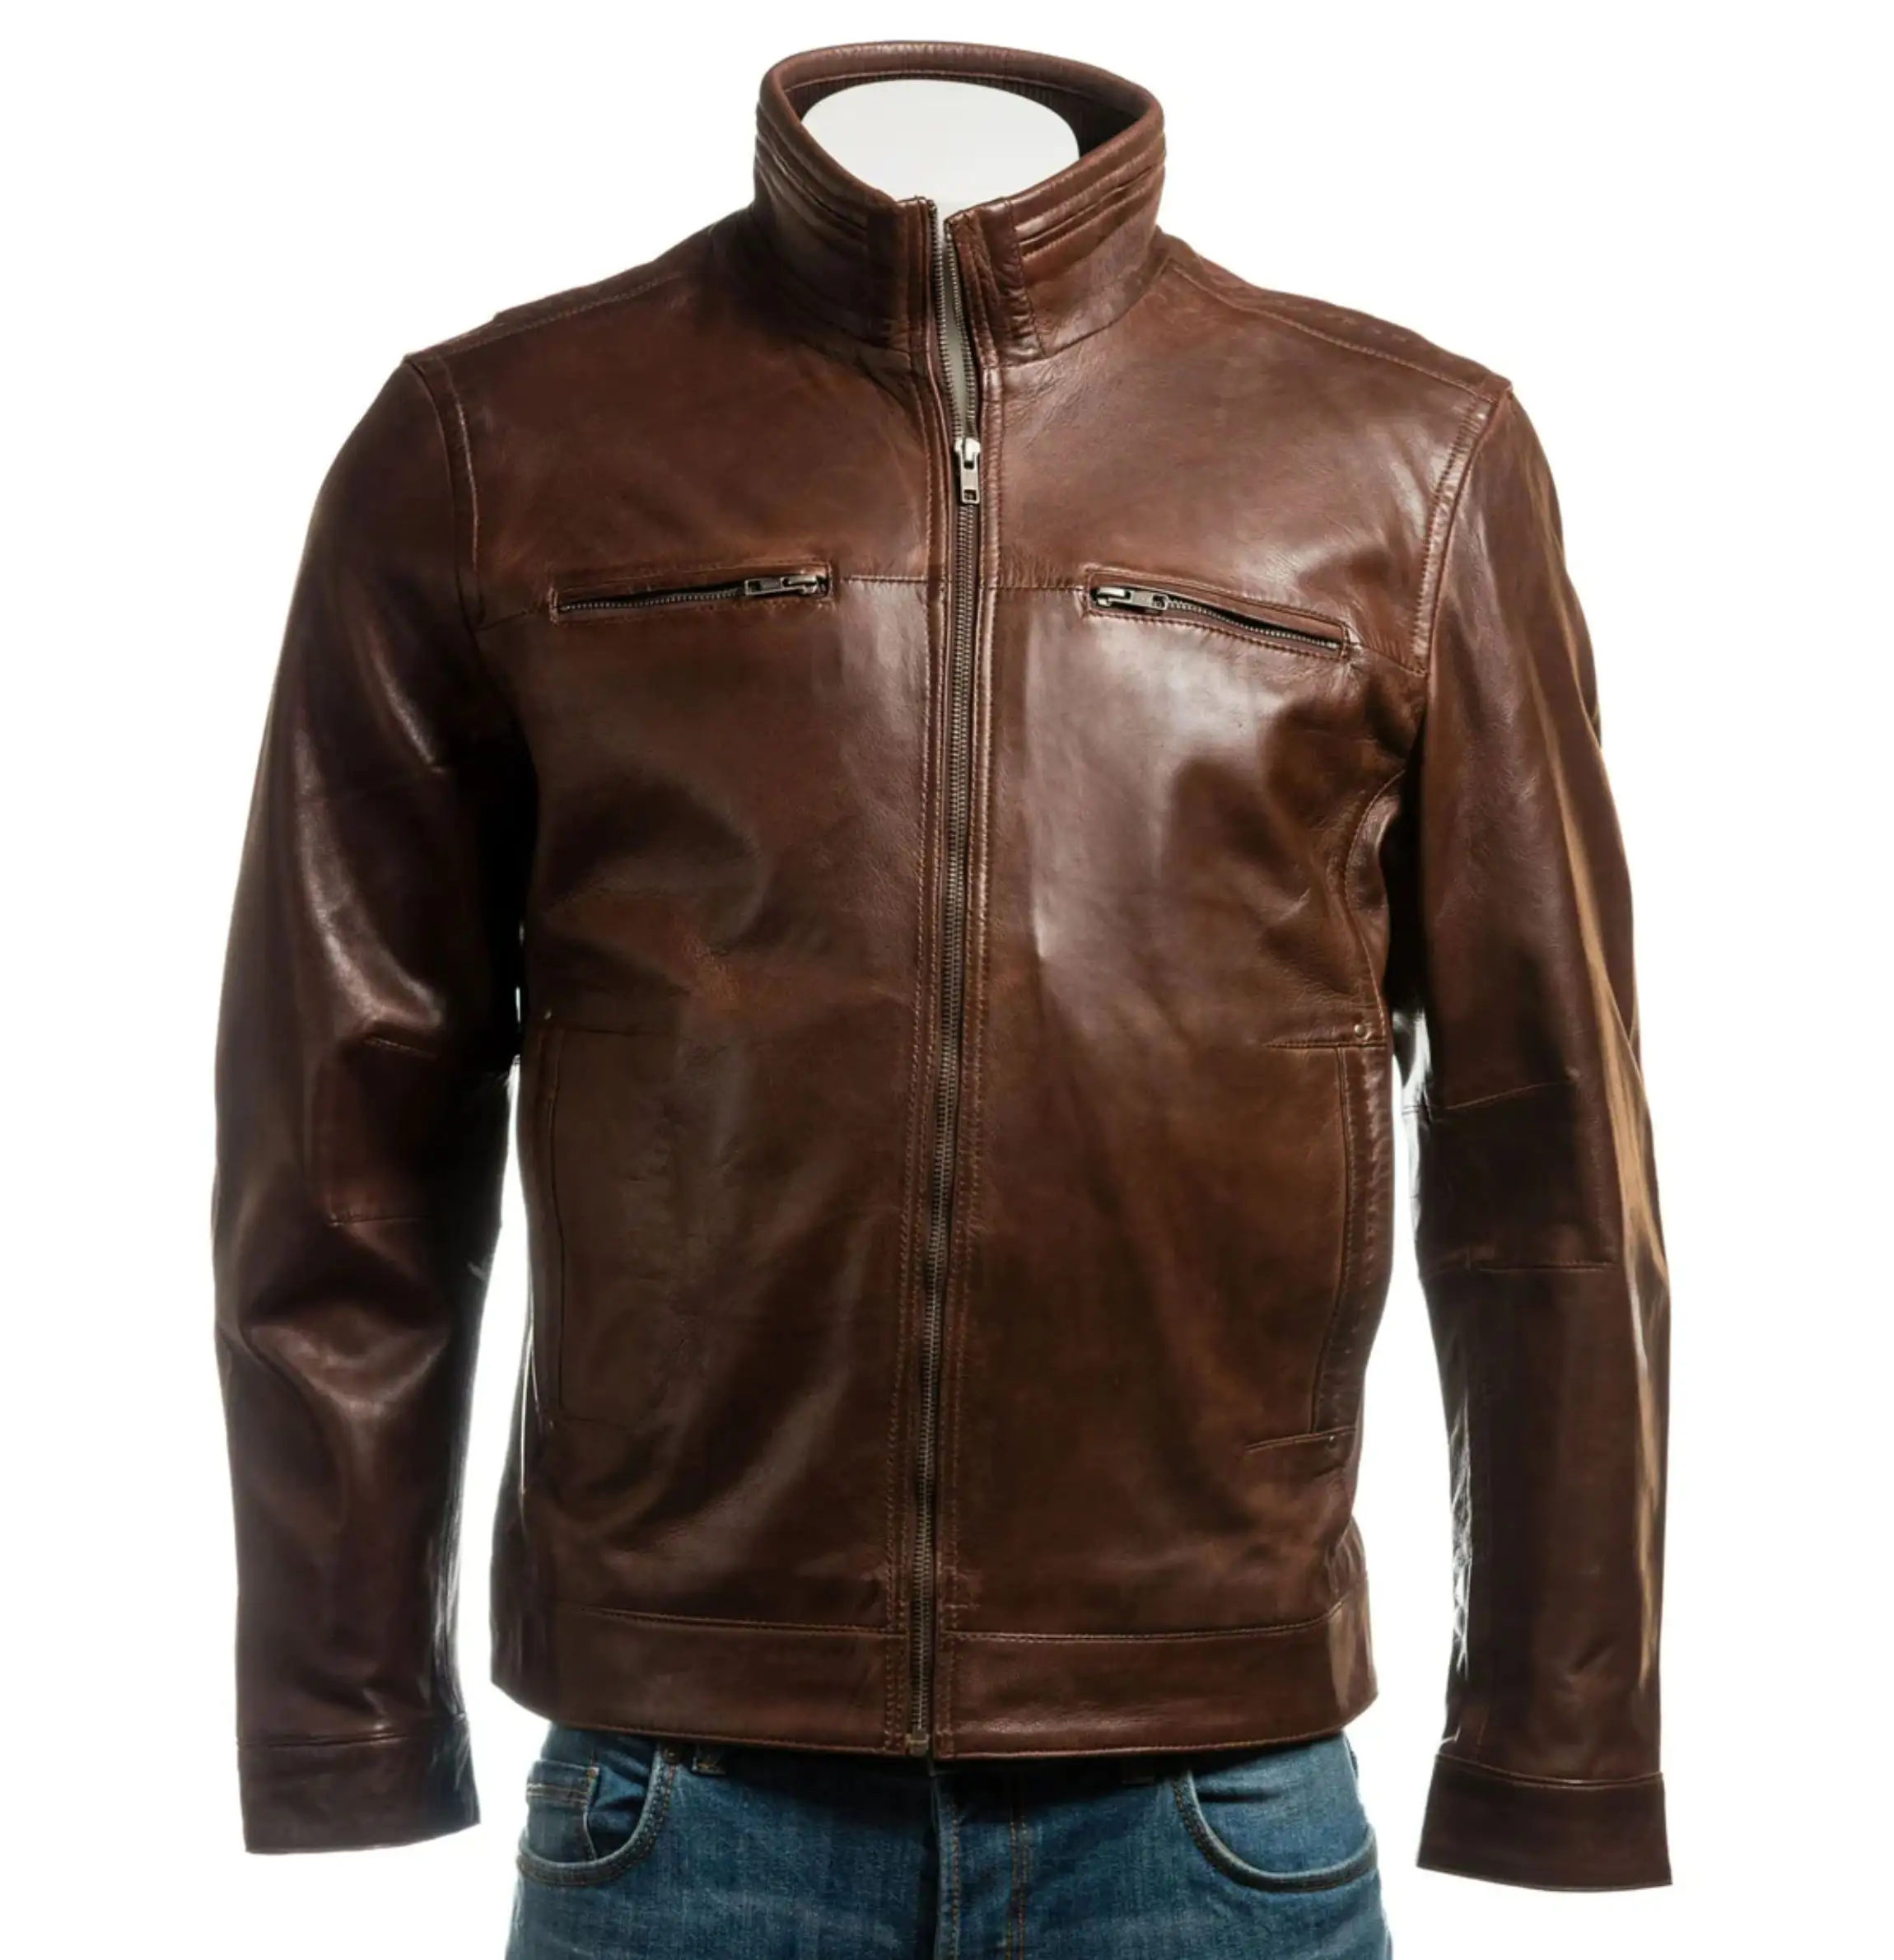 Jaket kulit PU berkendara sepeda motor pria, jaket kulit PU sepeda motor nyaman bersirkulasi